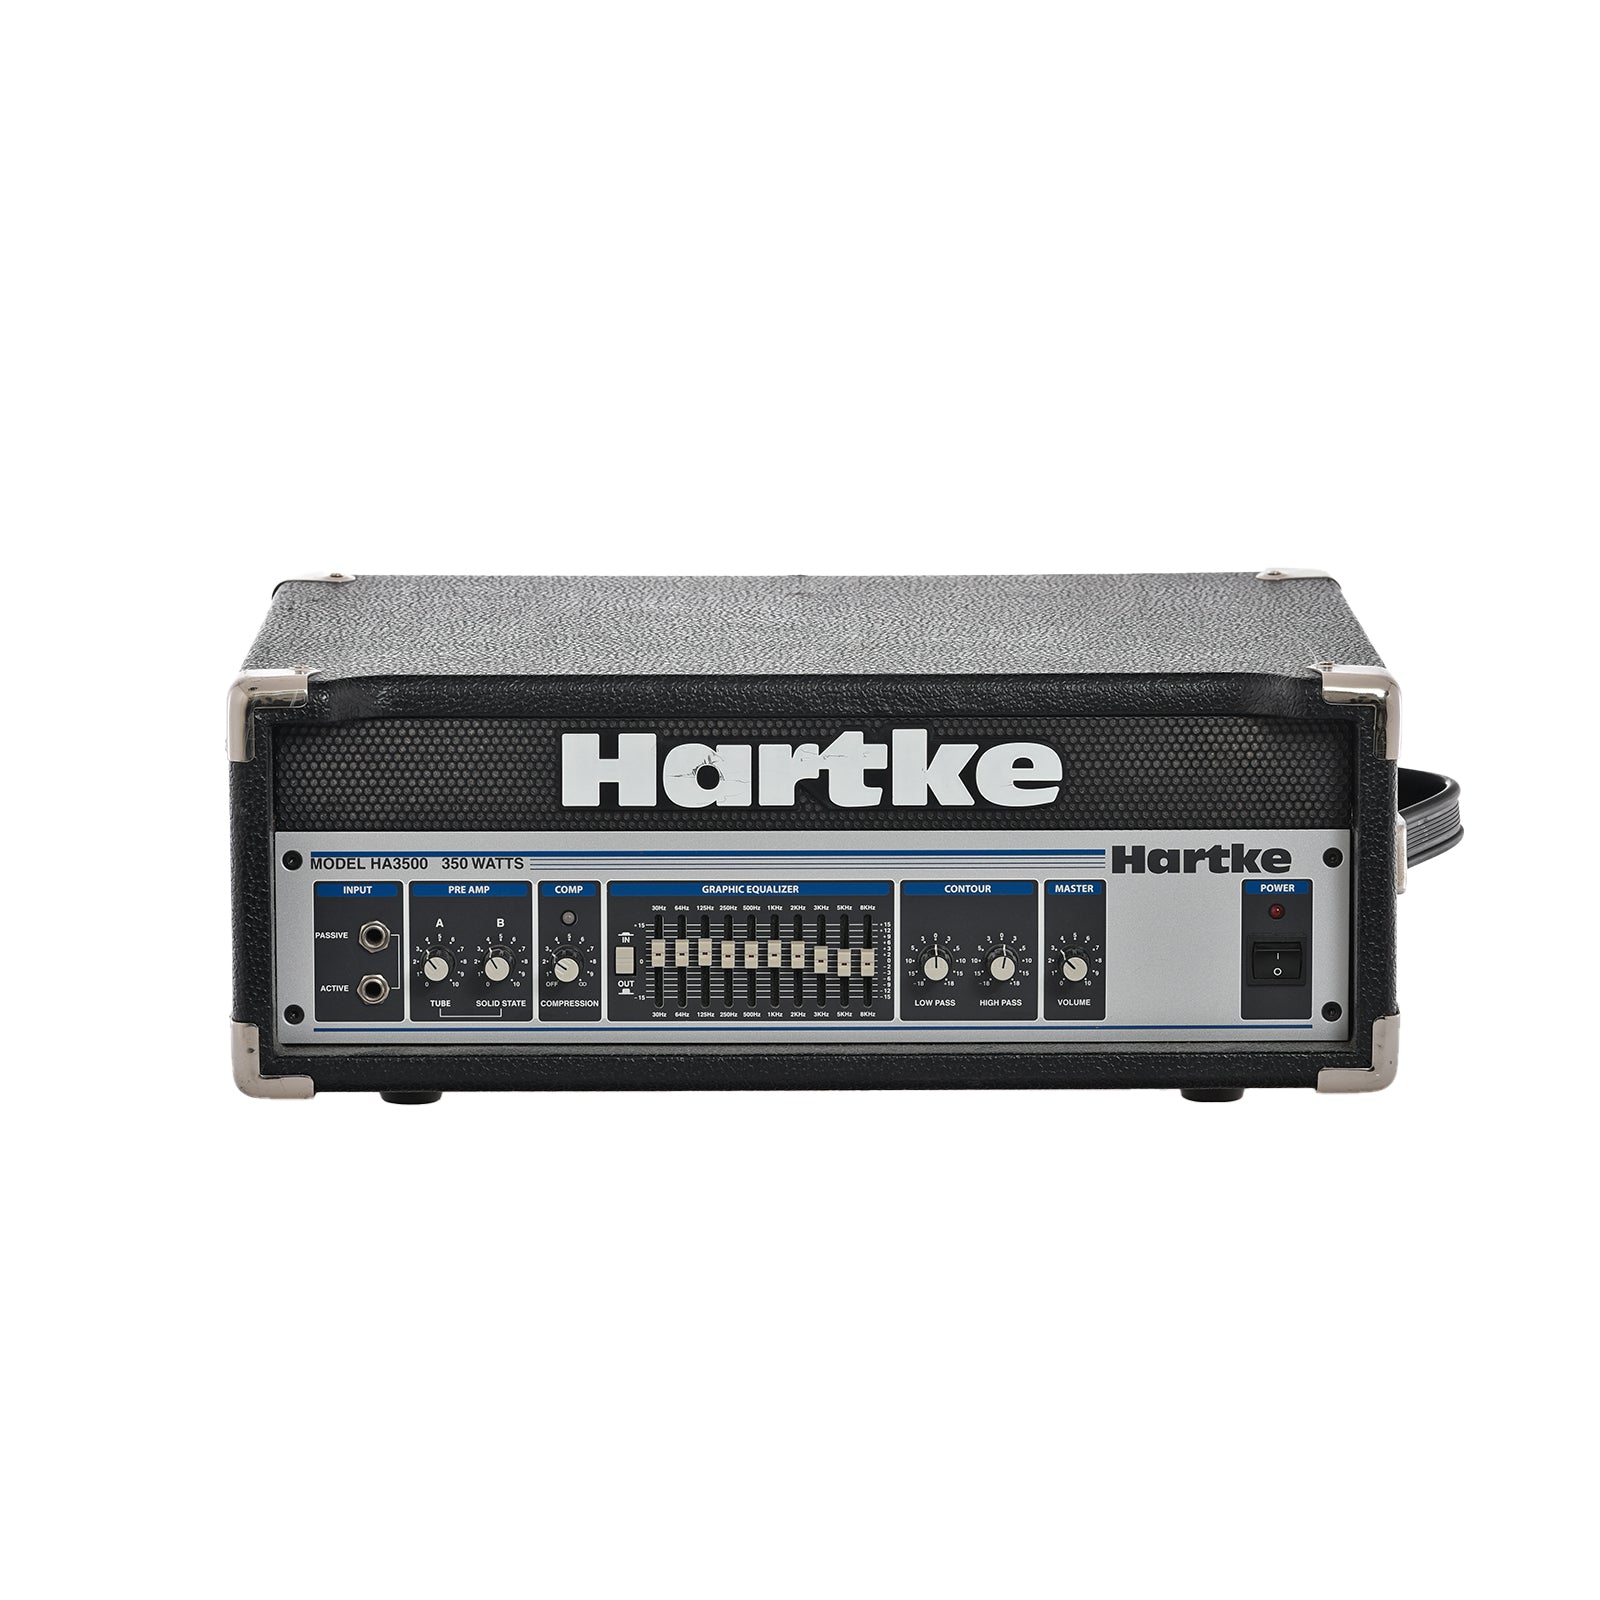 Hartke HA-3500 Bass Head